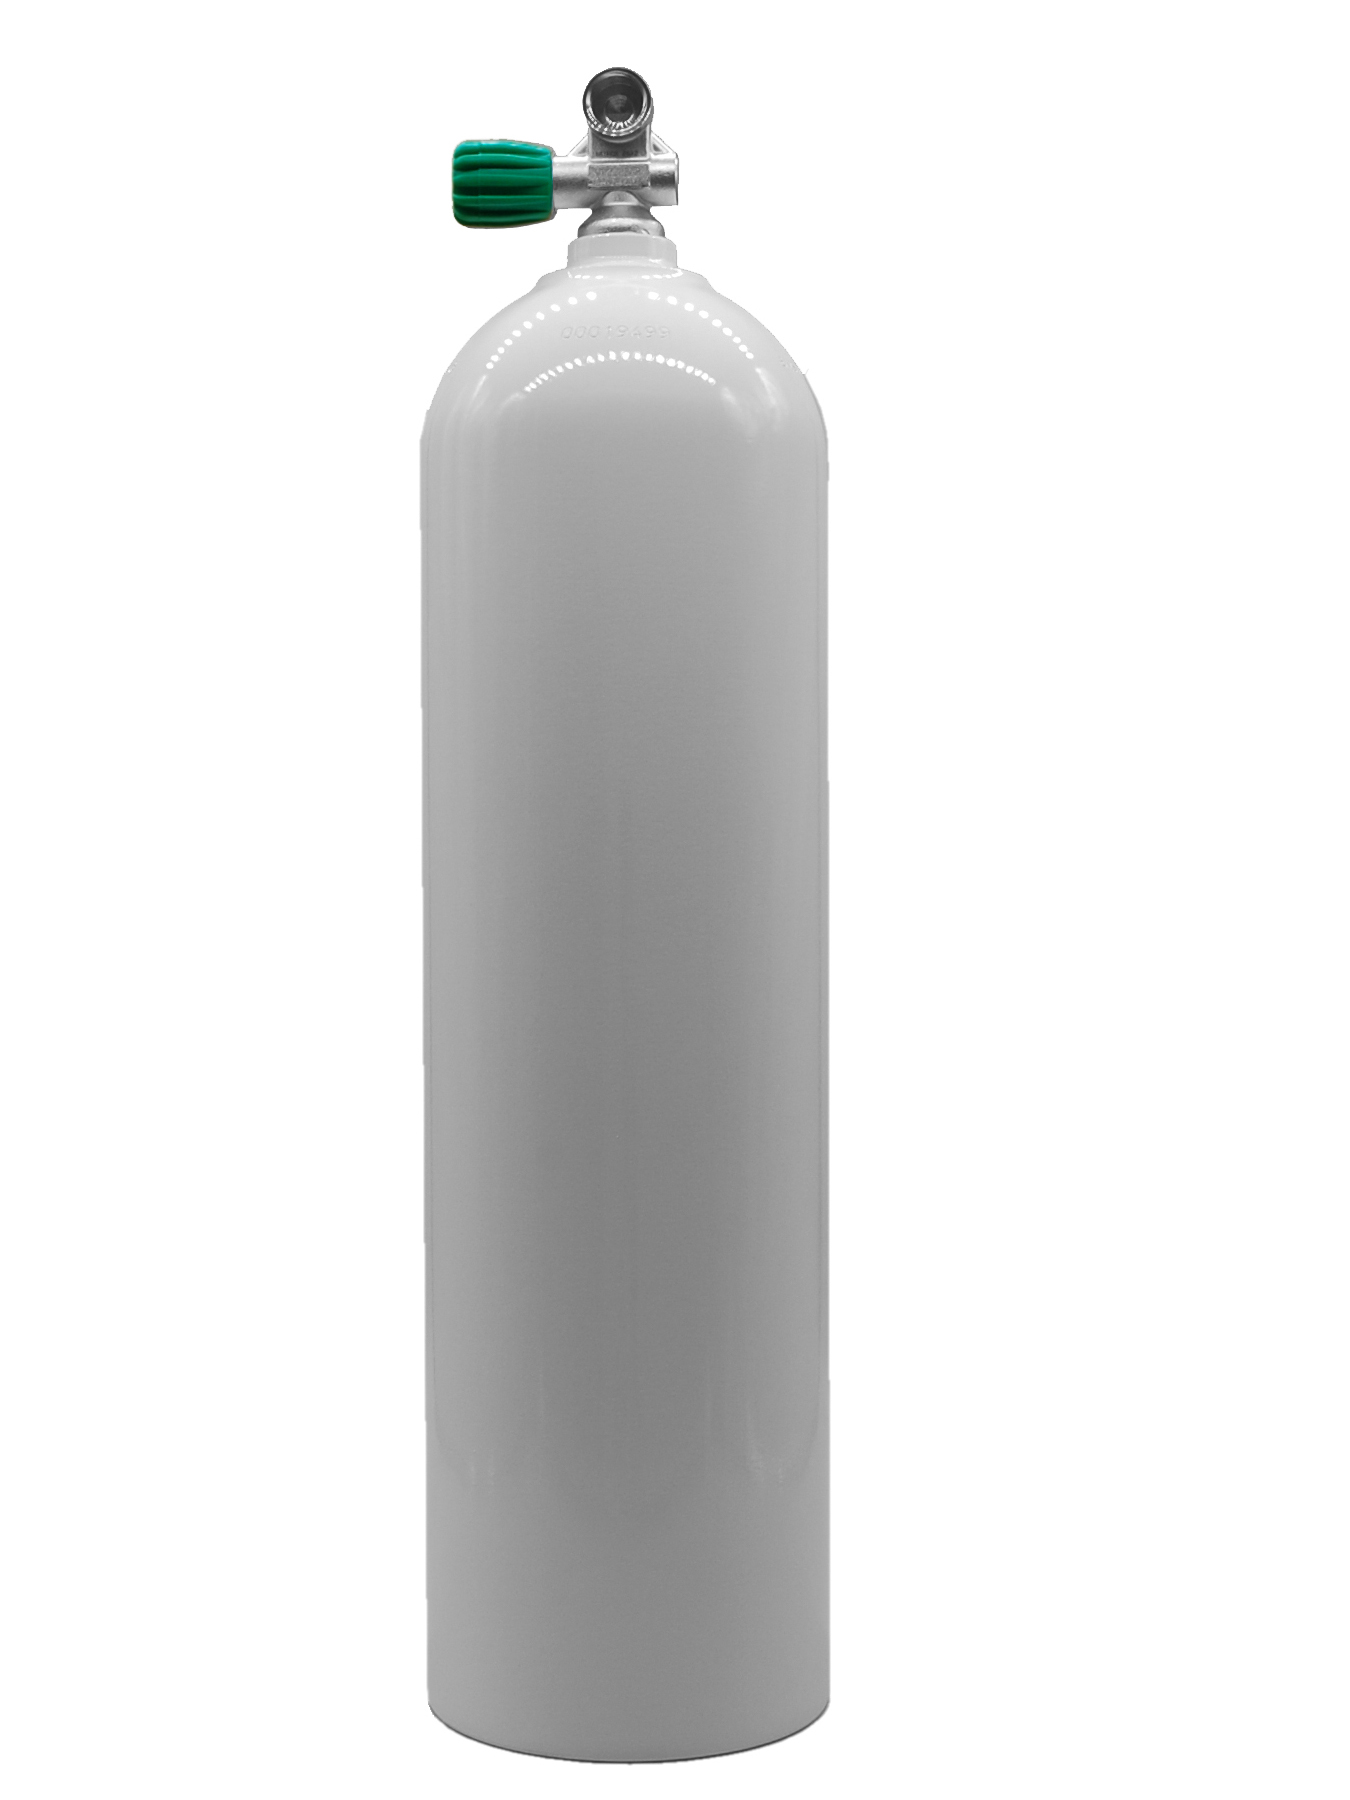 MES 11,1L Aluflasche weiss 207 bar mit Nitrox Ventil links